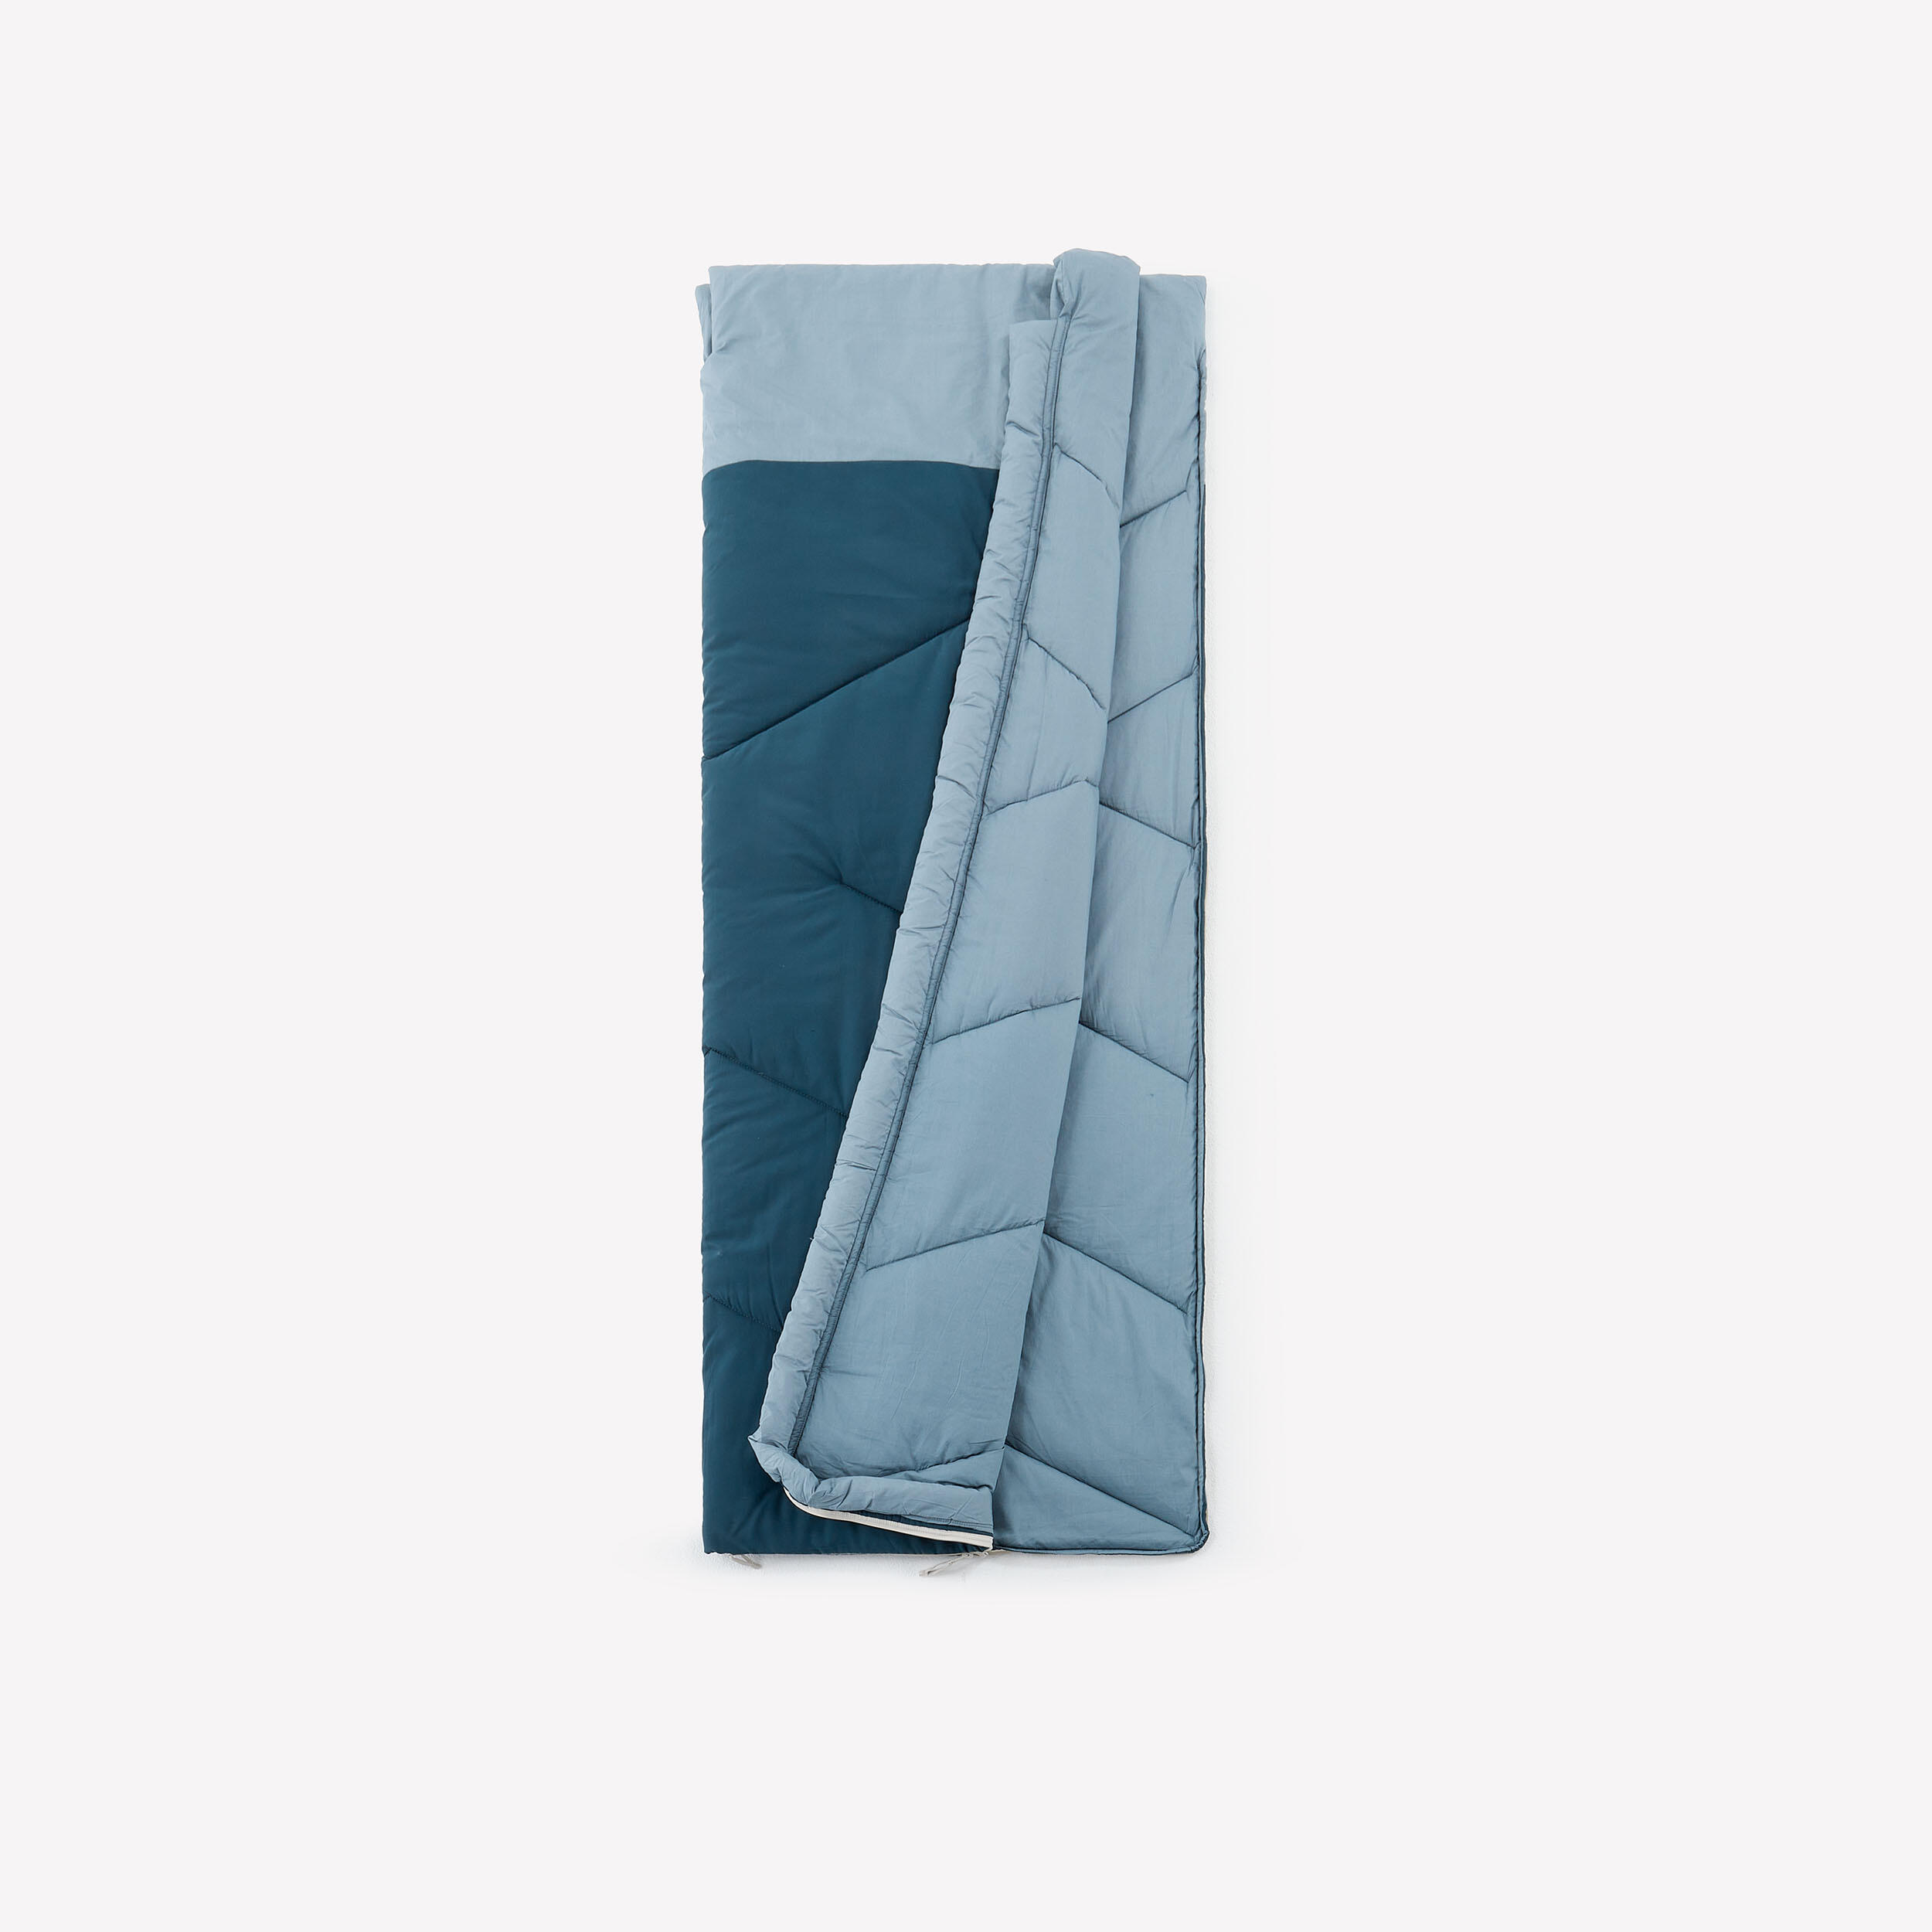 COTTON SLEEPING BAG FOR CAMPING - ULTIMCOMFORT 10° COTTON BLUE 4/6